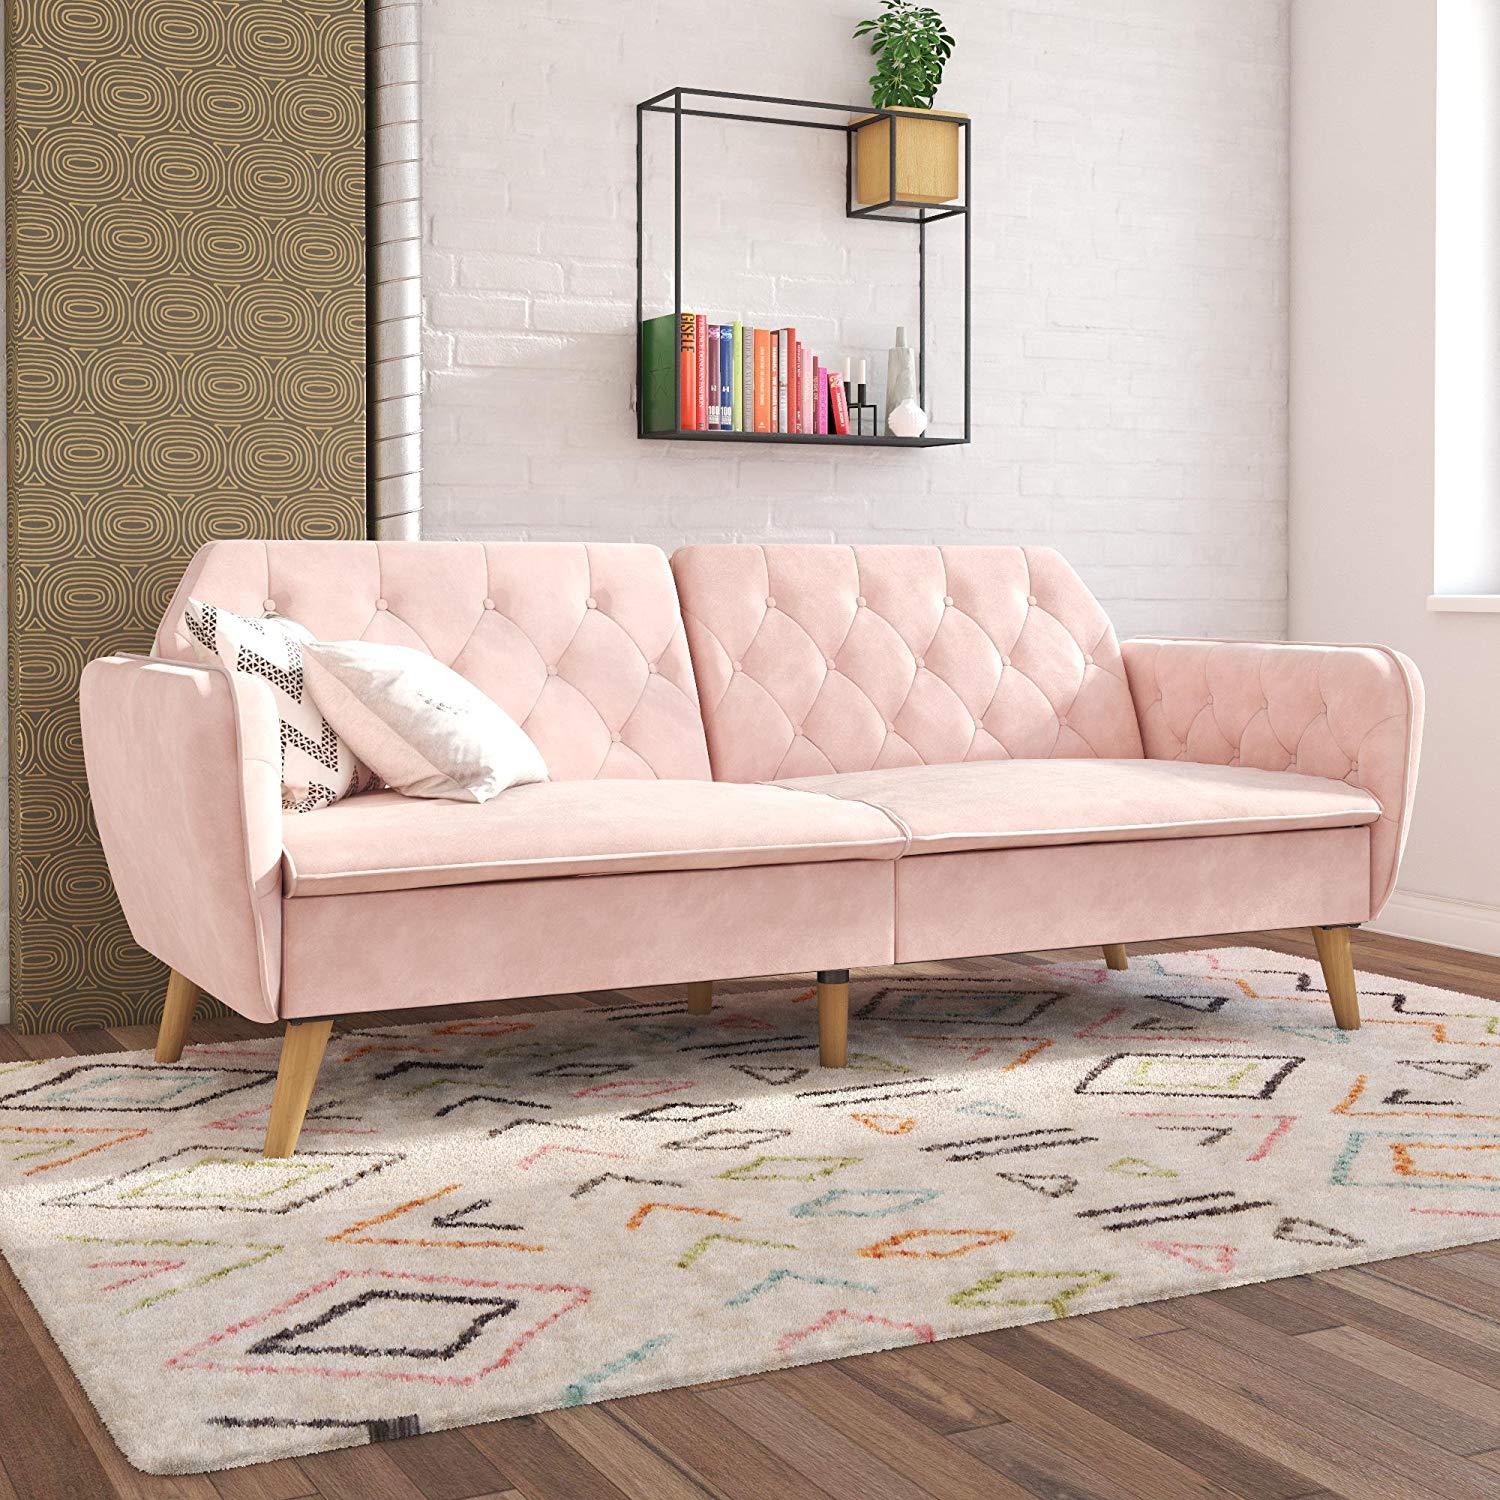 pink velvet futon with wooden legs